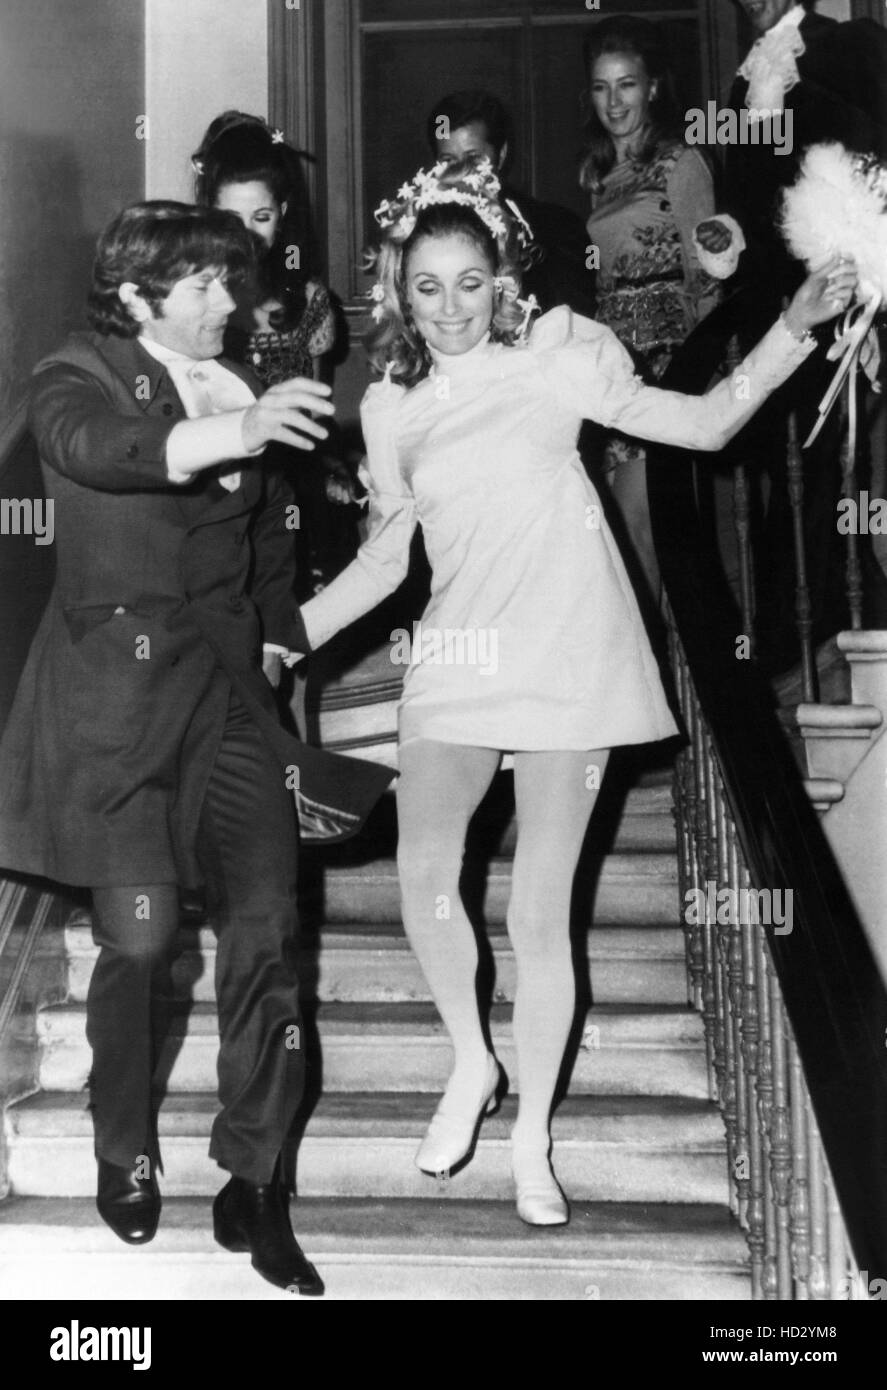 The London wedding of Roman Polanski, left, and Sharon Tate, January 20, 1968 (bridesmaid Barbara Parkins, behind Polanski) Stock Photo